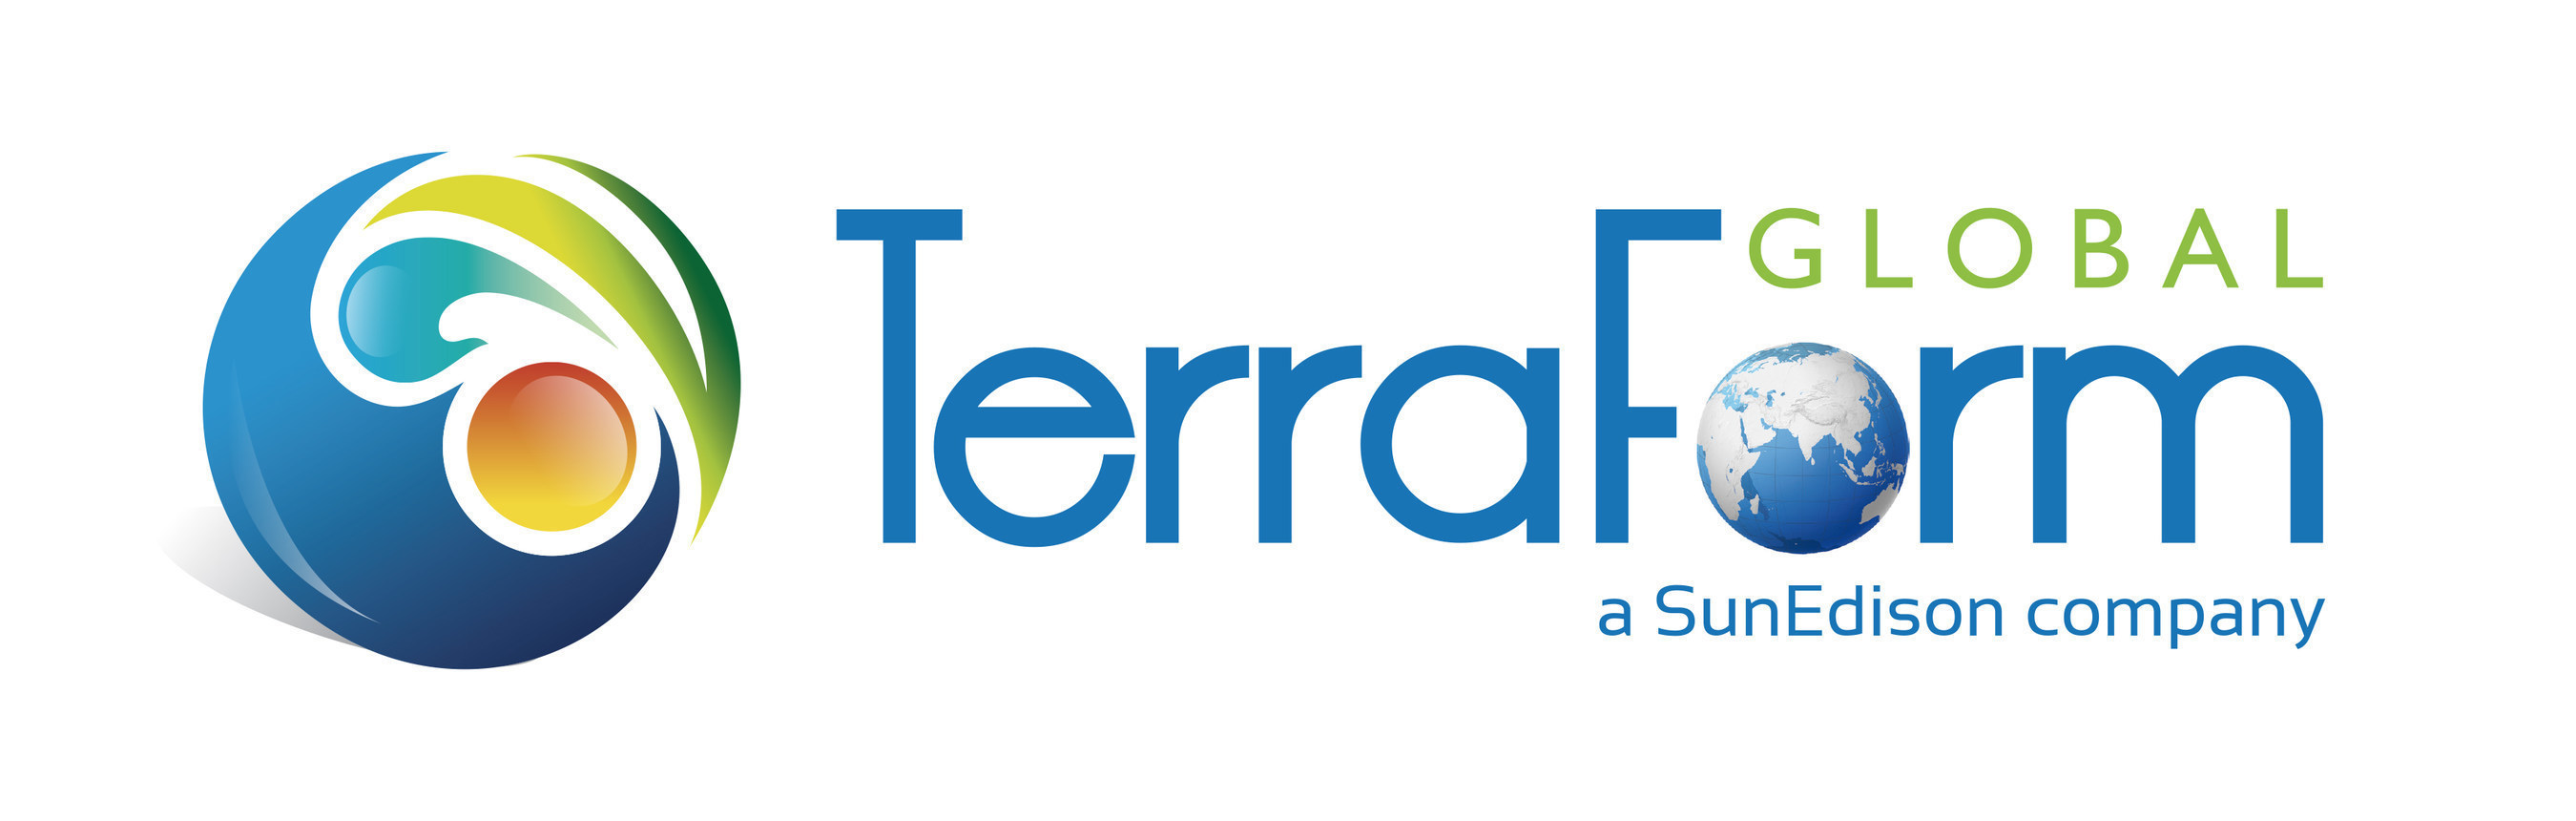 TerraForm Global, Inc. Logo